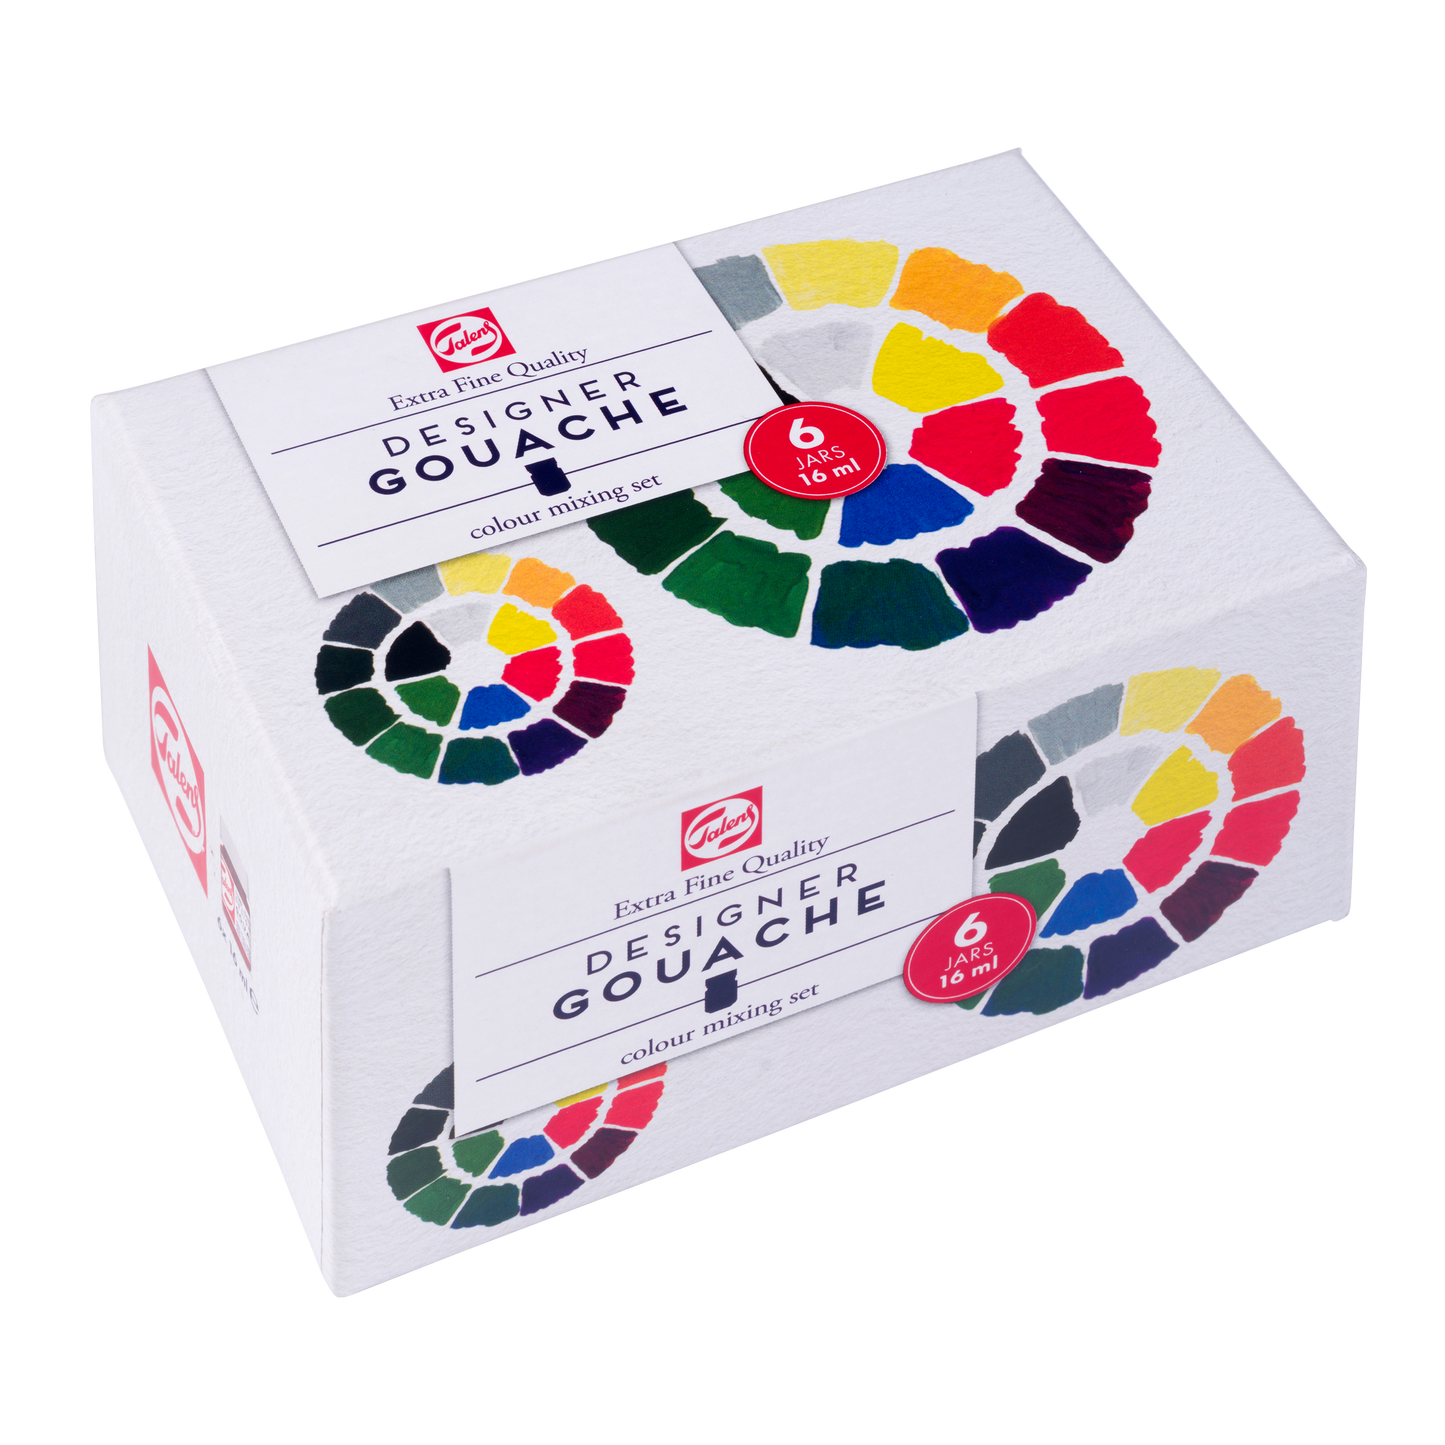 Talens Designer Gouache: Colour Mixing Set with 6 16ml jars